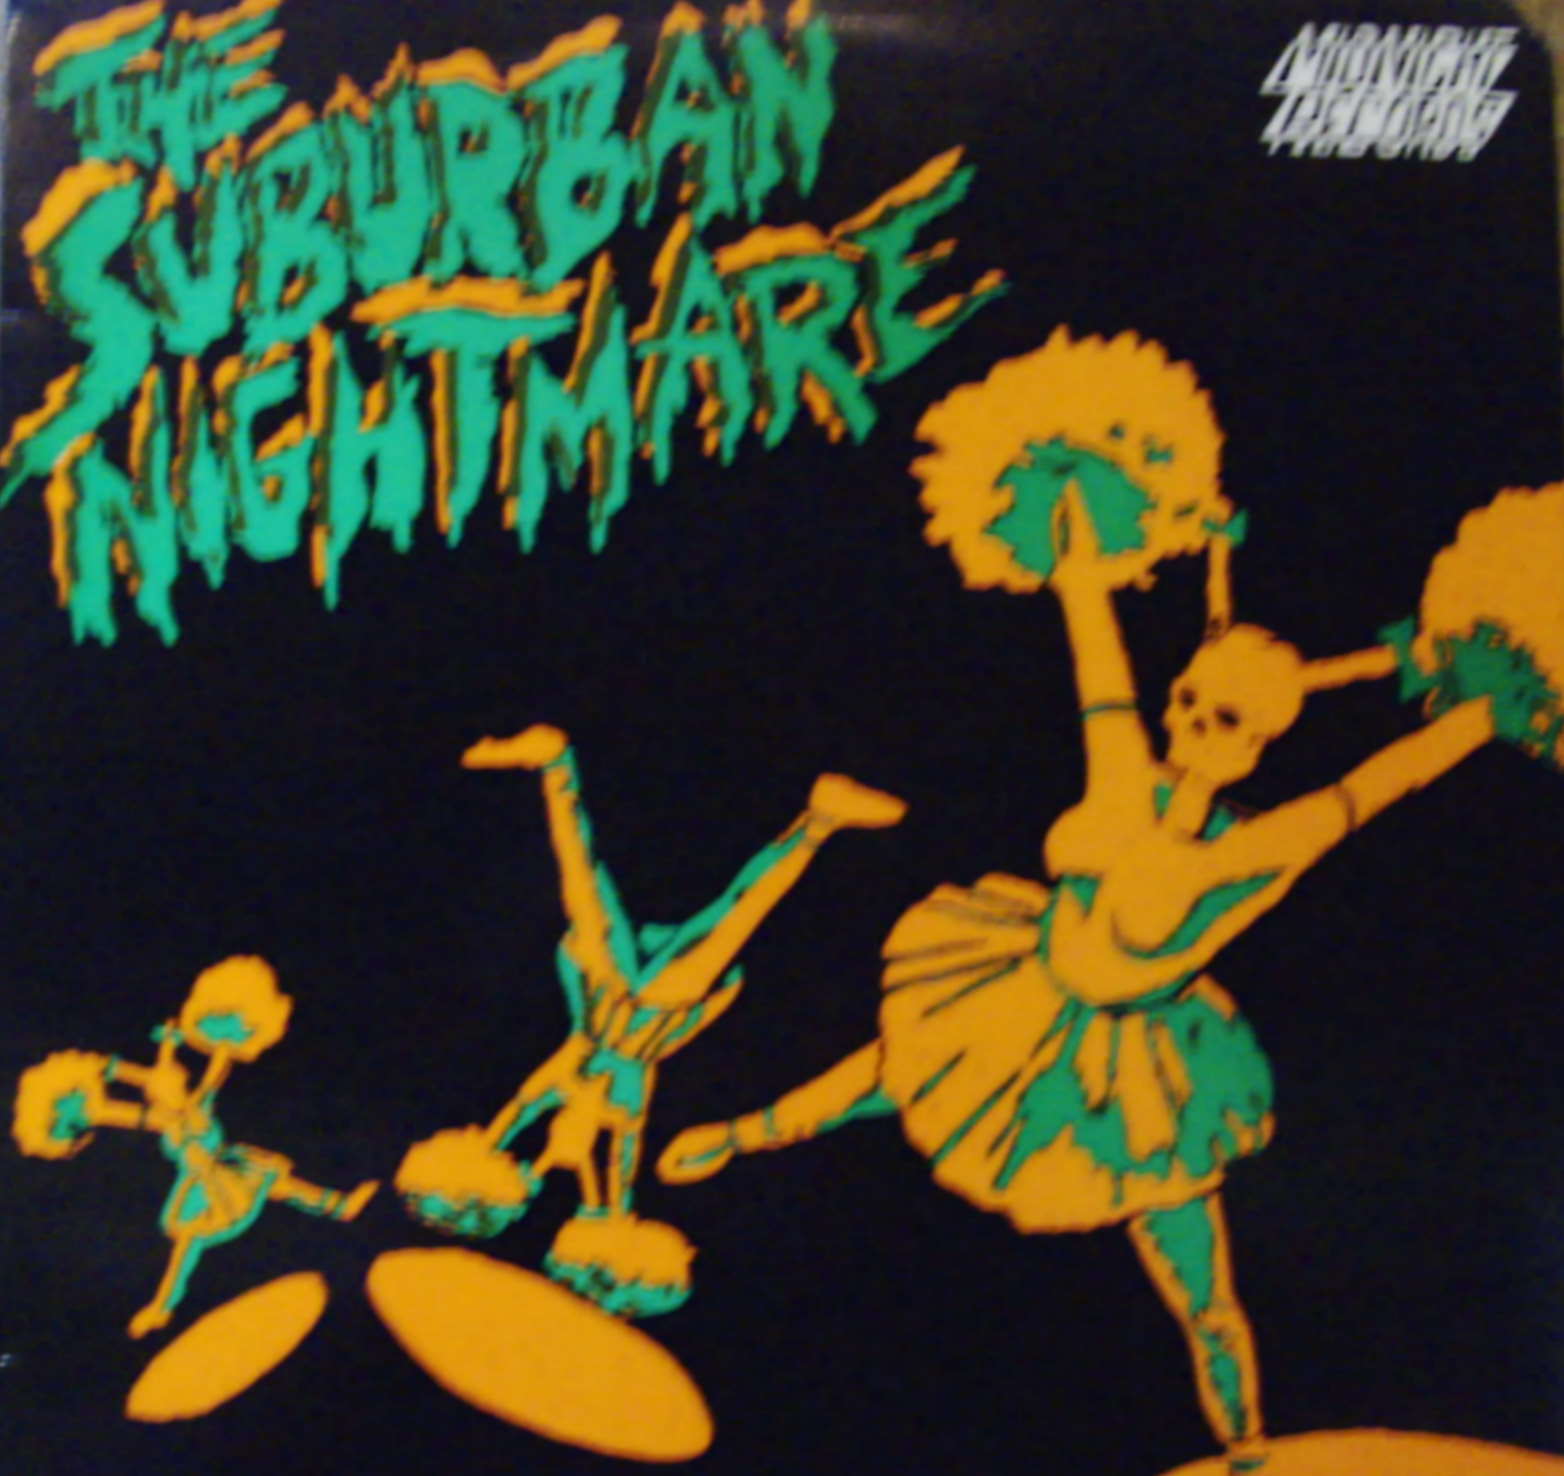 Suburban Nightmare / A Hard Day's Nightmare